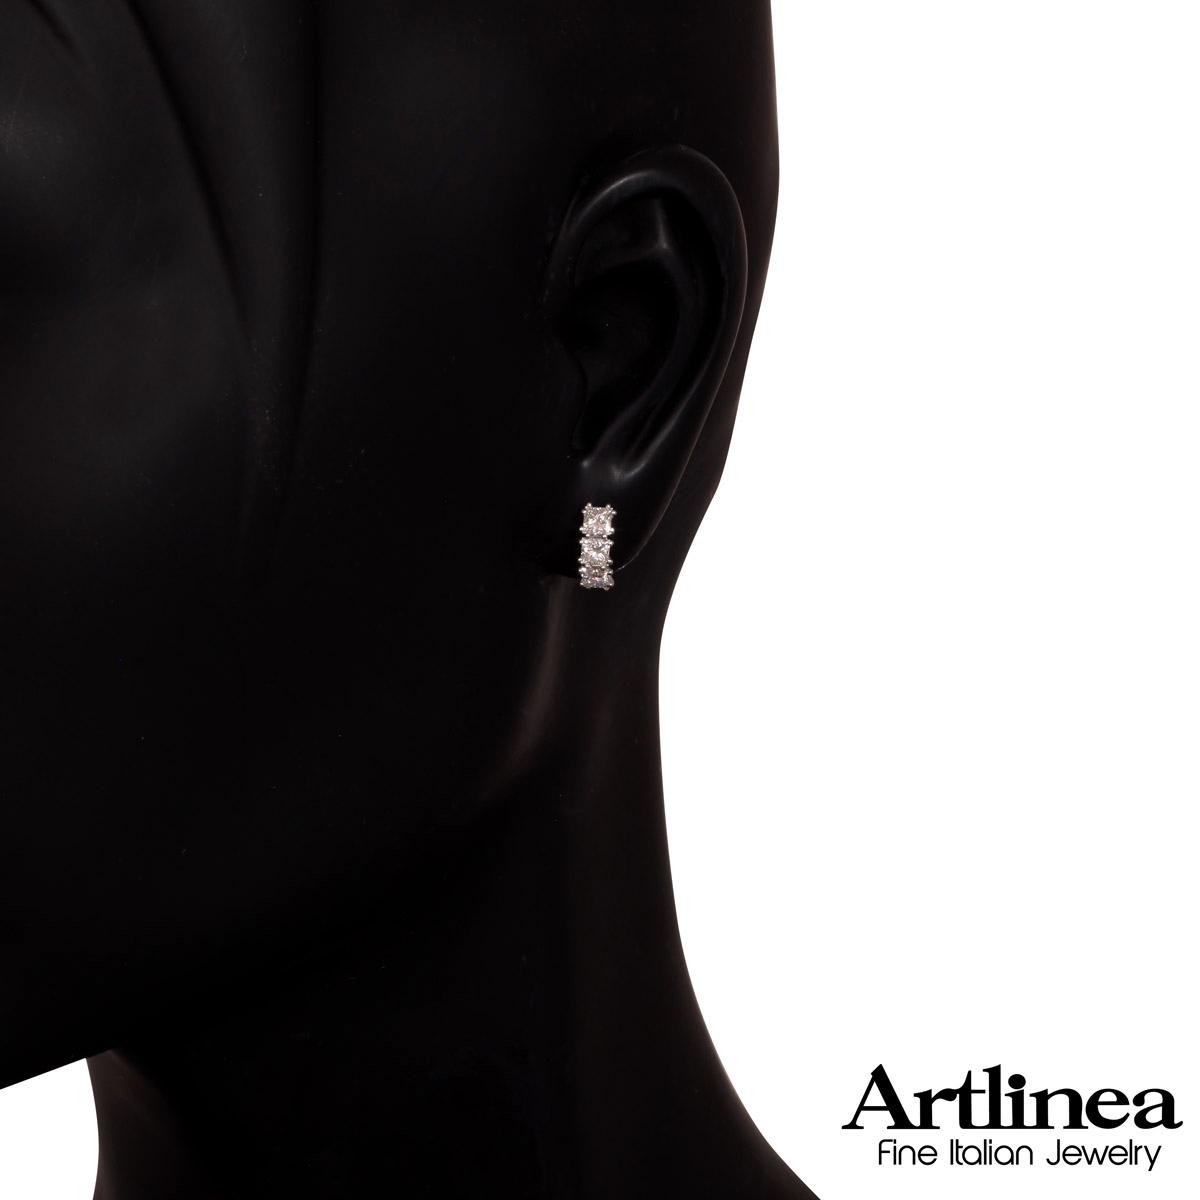 Trilogy earrings with princess cut diamonds